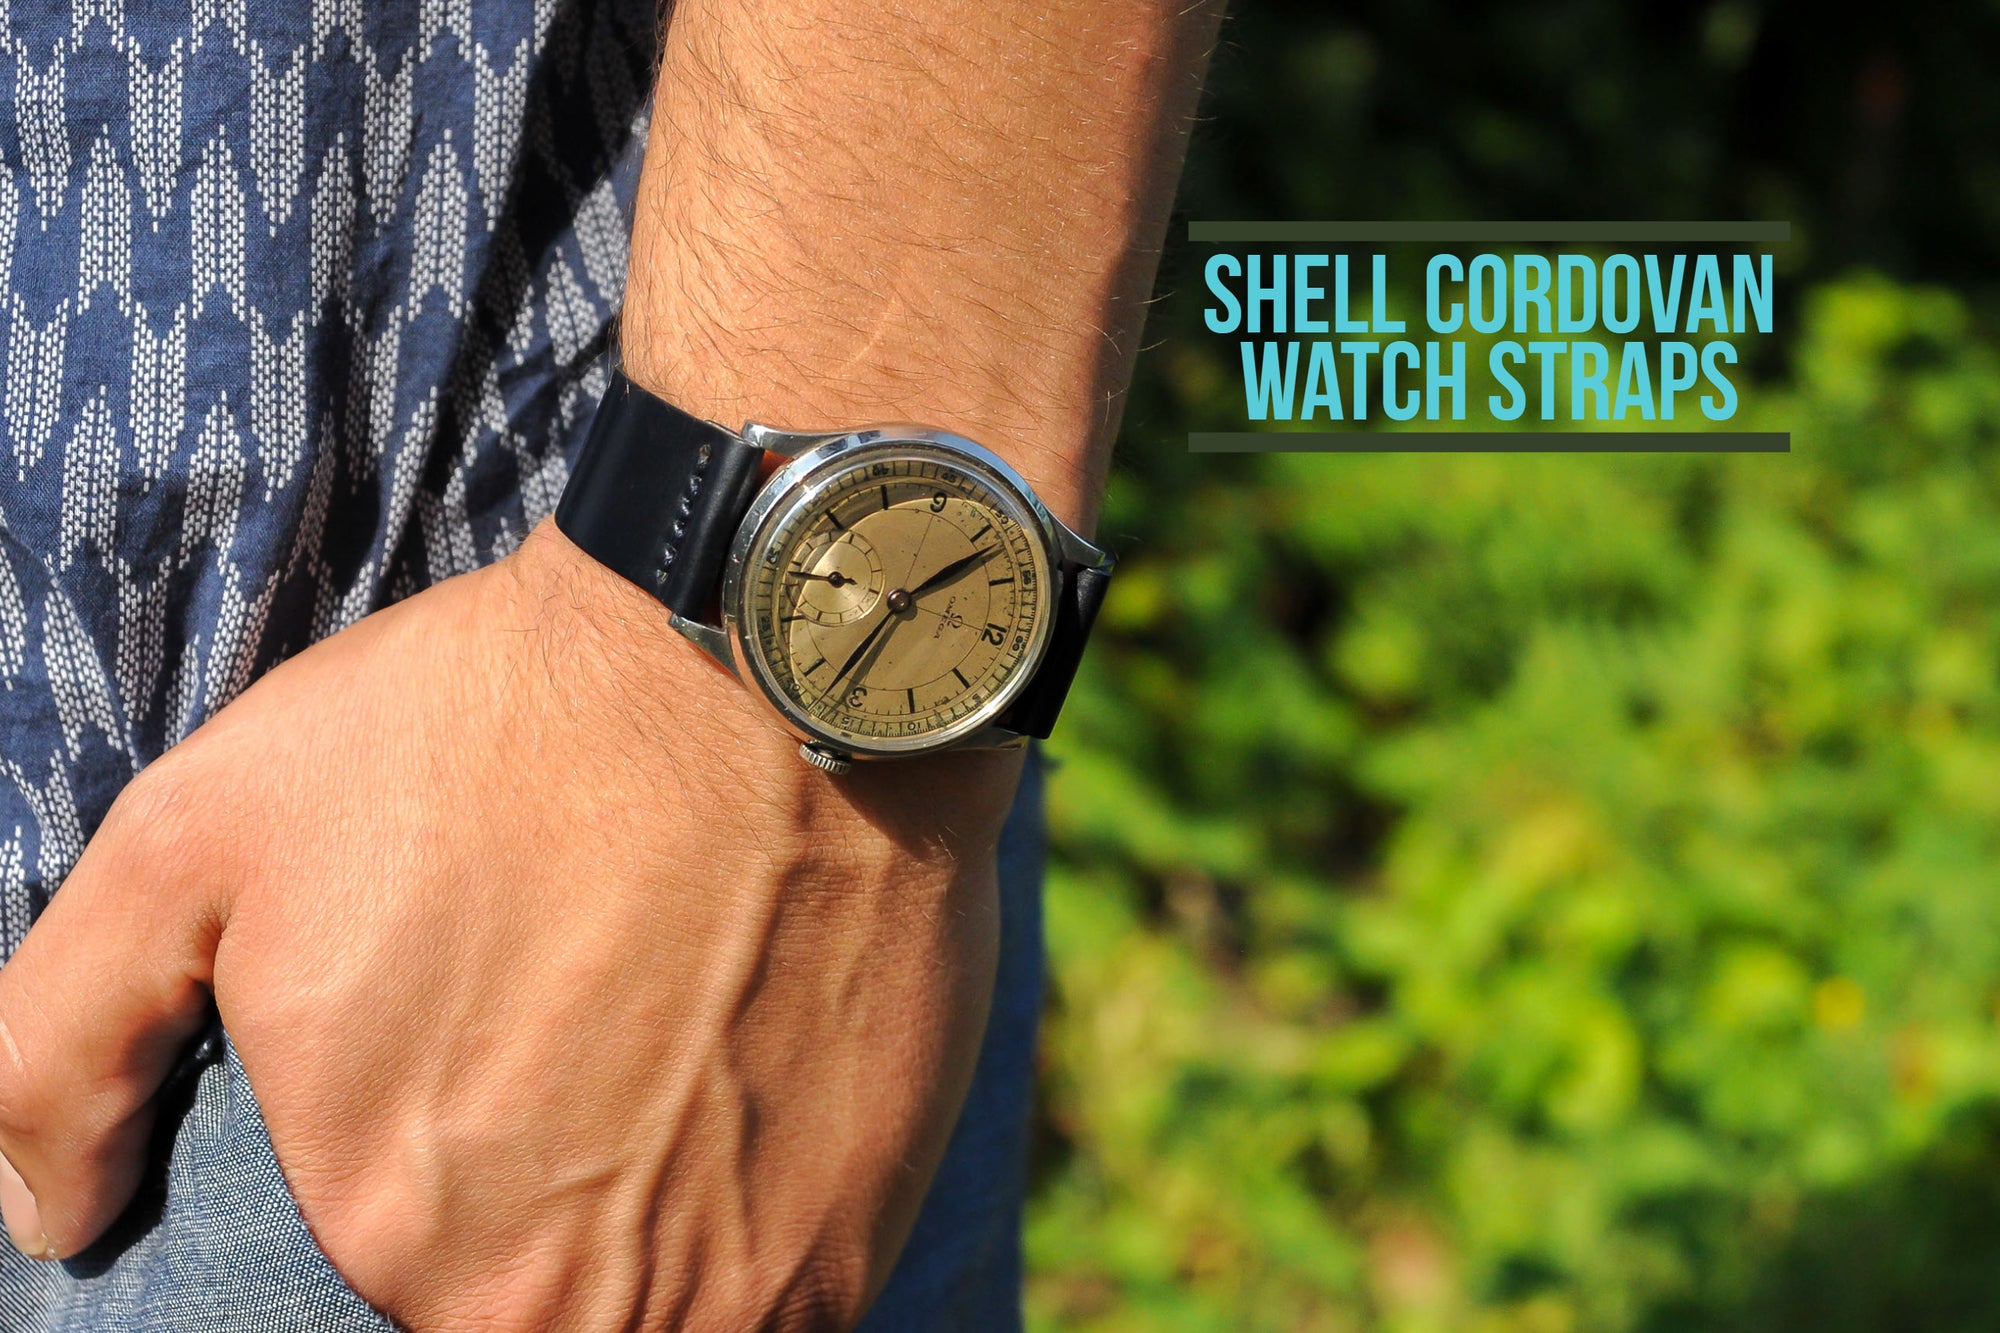 Shell Cordovan Watch Straps